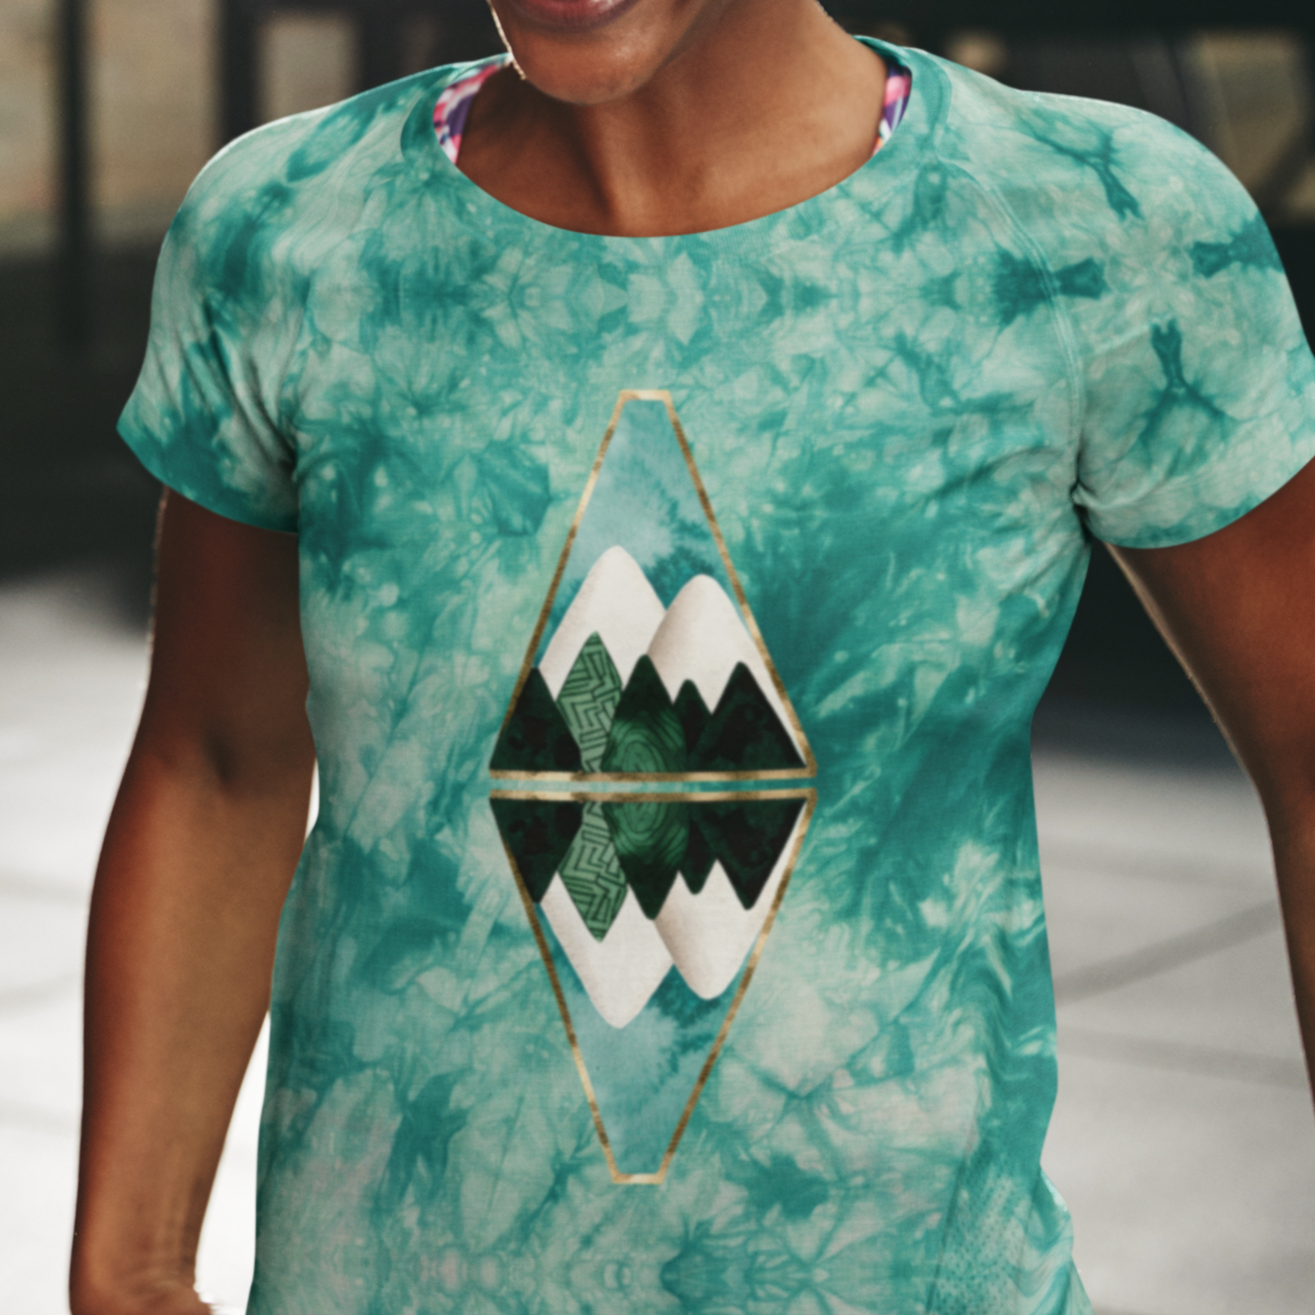 Teal Tie Dye Reflect Mountain Women's T-shirt